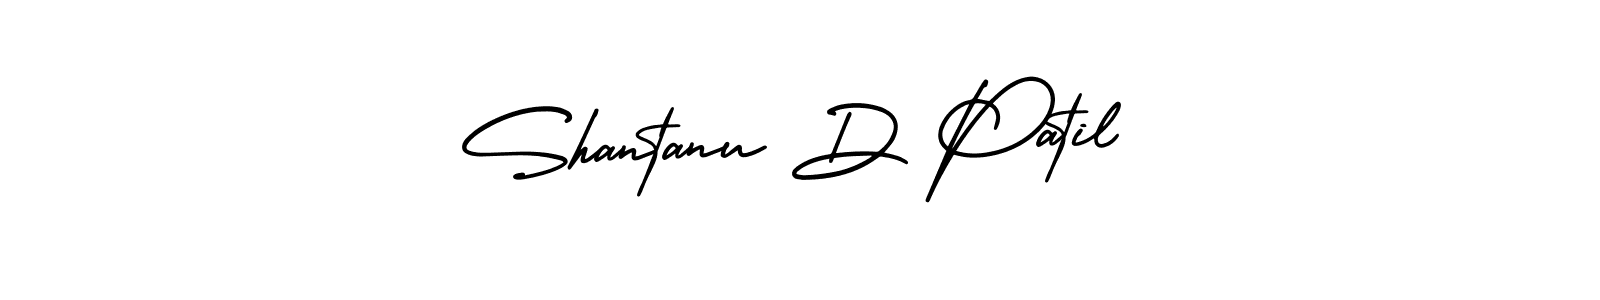 How to Draw Shantanu D Patil signature style? AmerikaSignatureDemo-Regular is a latest design signature styles for name Shantanu D Patil. Shantanu D Patil signature style 3 images and pictures png